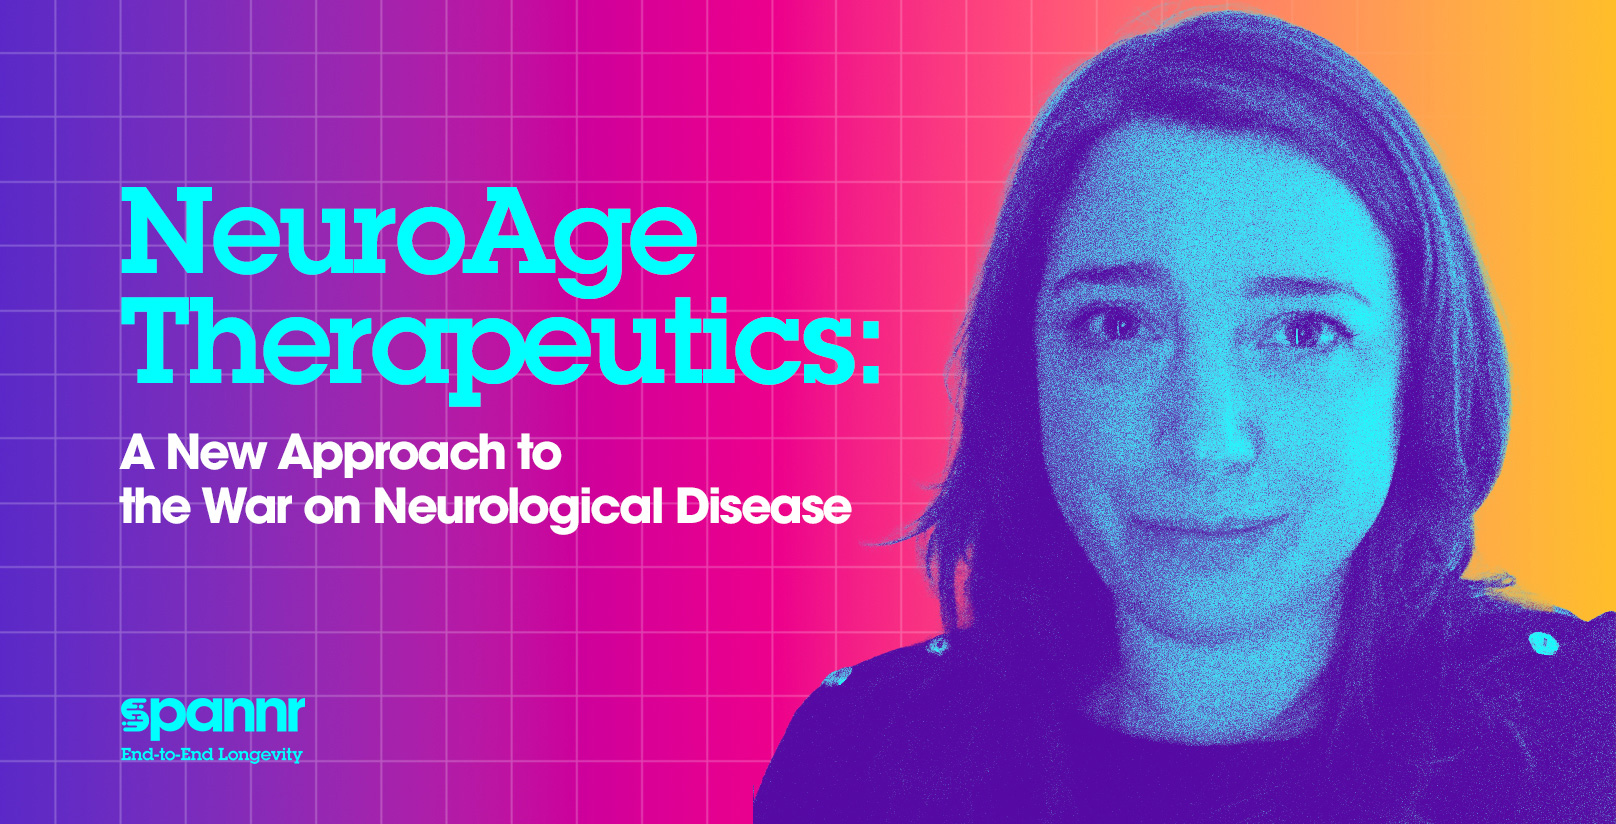 NeuroAge Therapeutics: A New Approach to the War on Neurological Disease